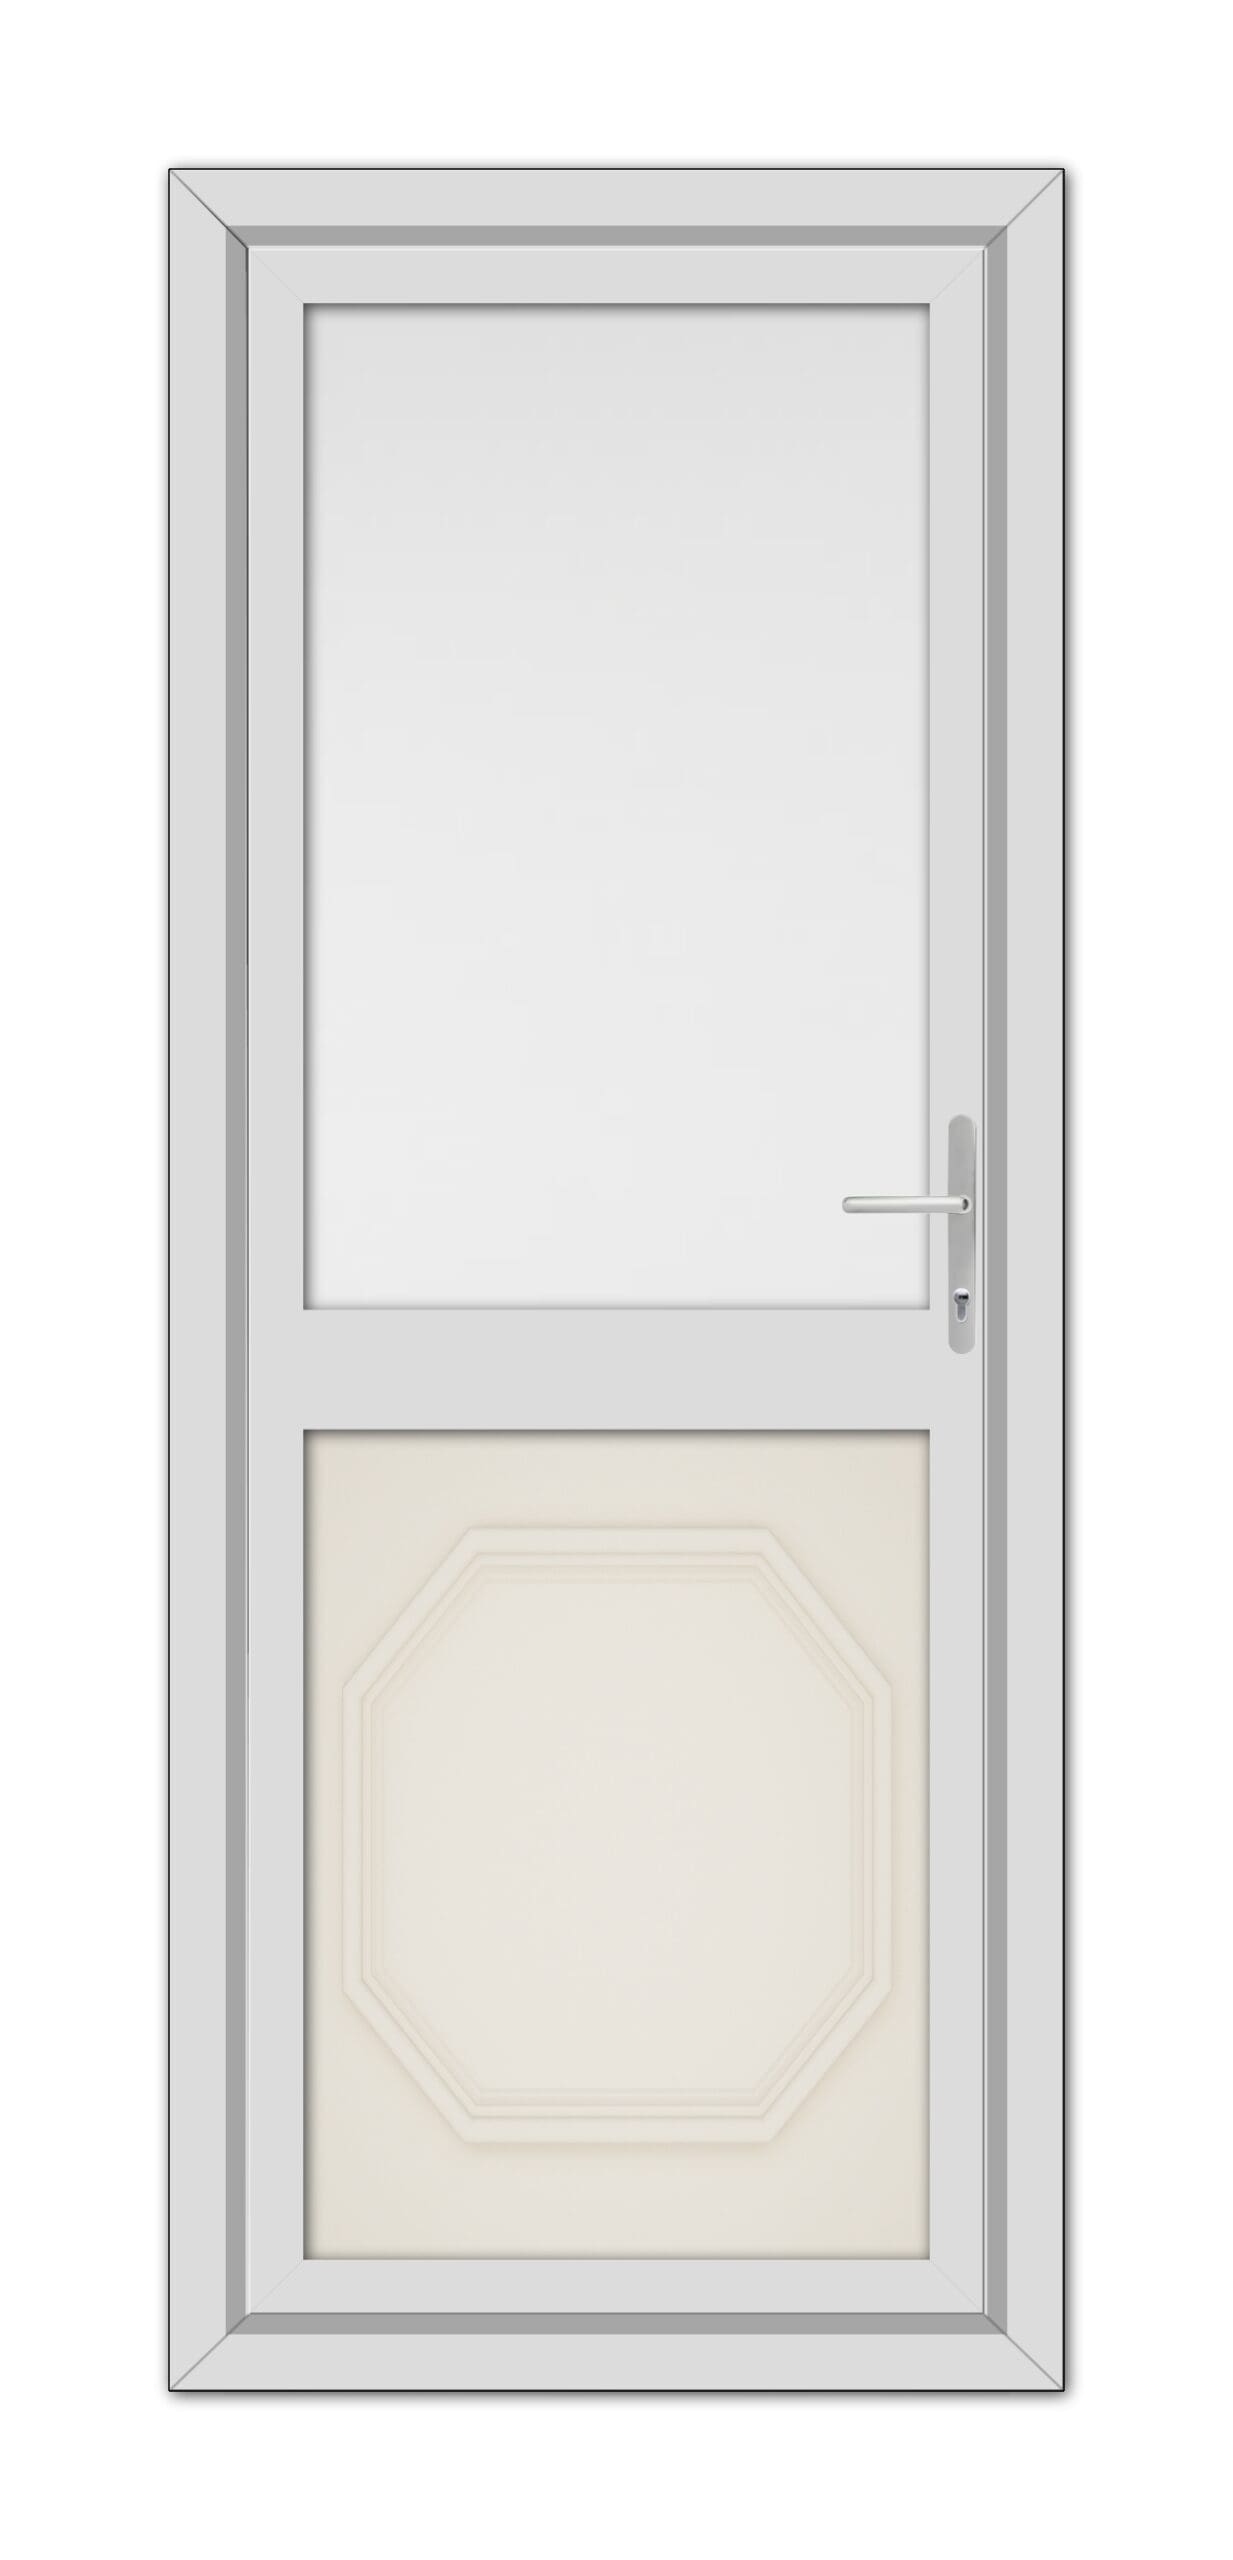 A modern Cream Buckingham Half uPVC Back Door featuring a sleek design with a silver handle and an octagonal panel at the bottom.